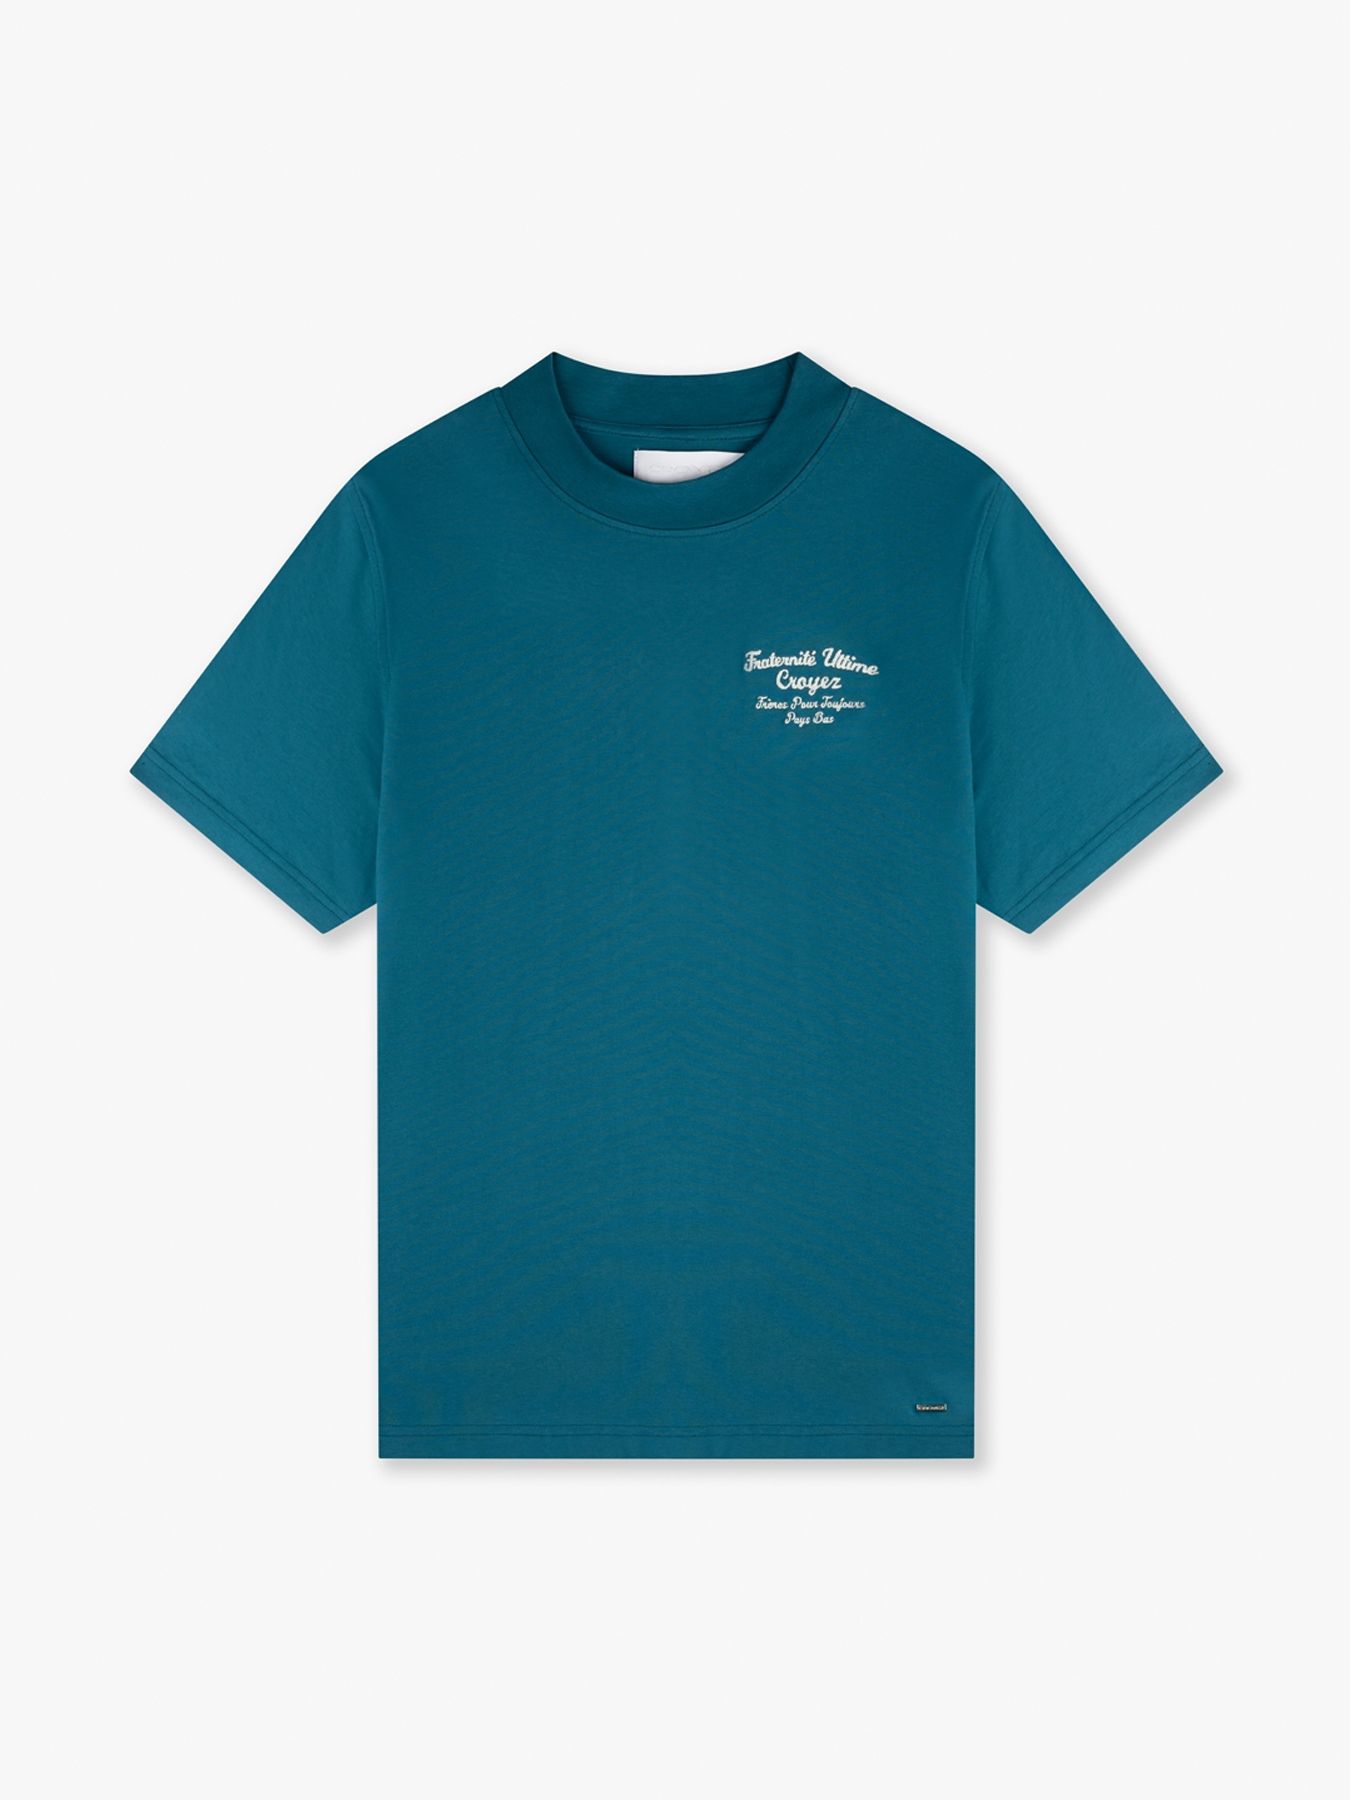 Croyez Fraternite T-shirt petrol 00108225-B6